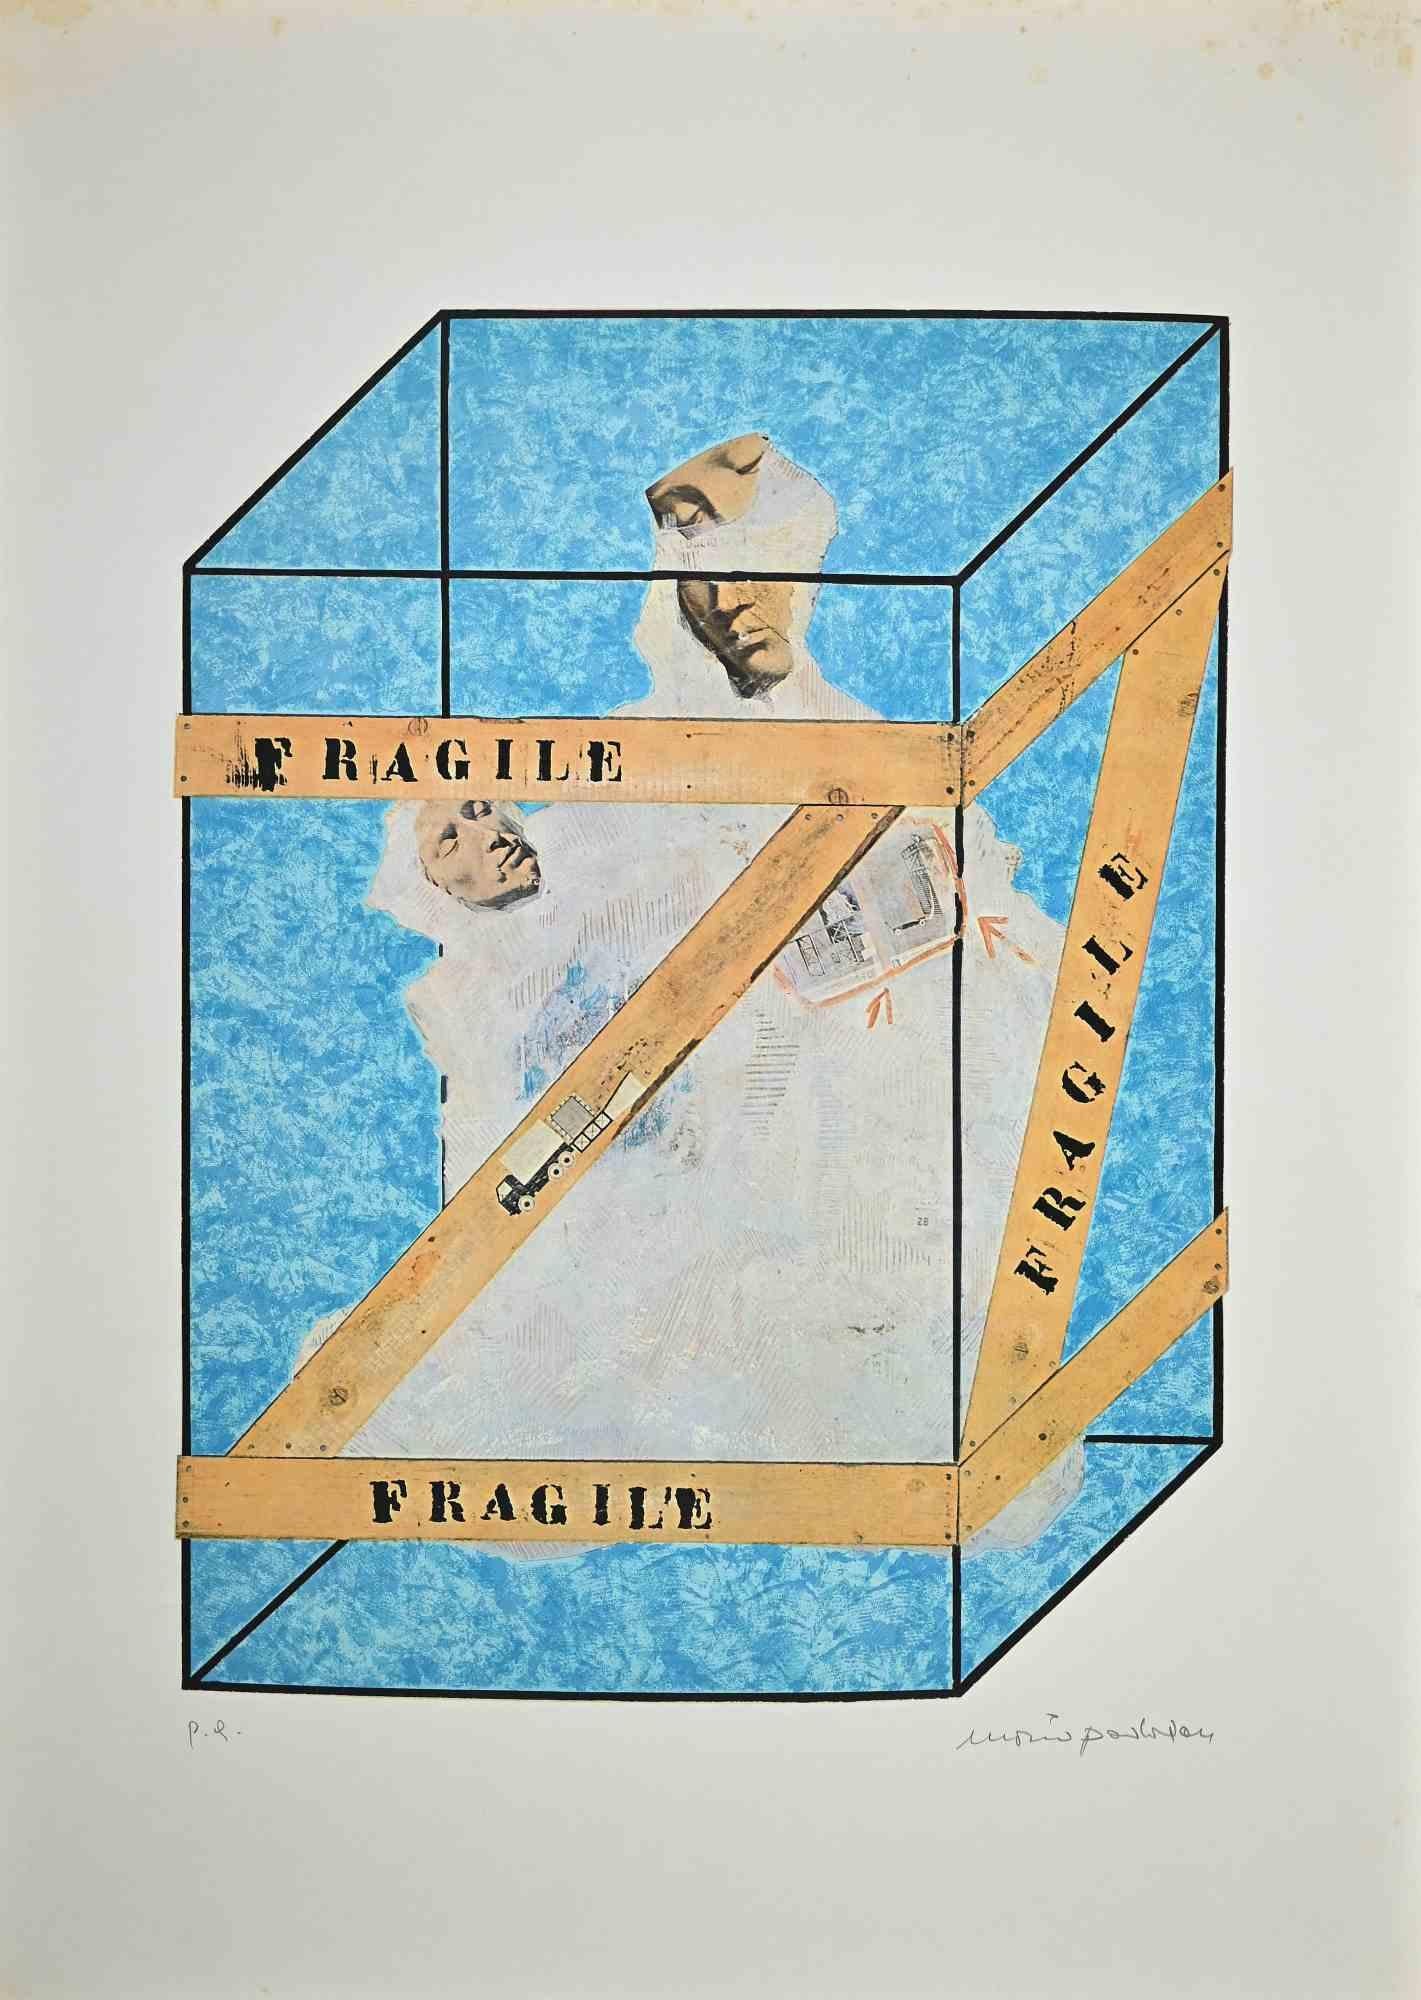 Fragile - Lithograph print by Mario Padovan  - 1990s